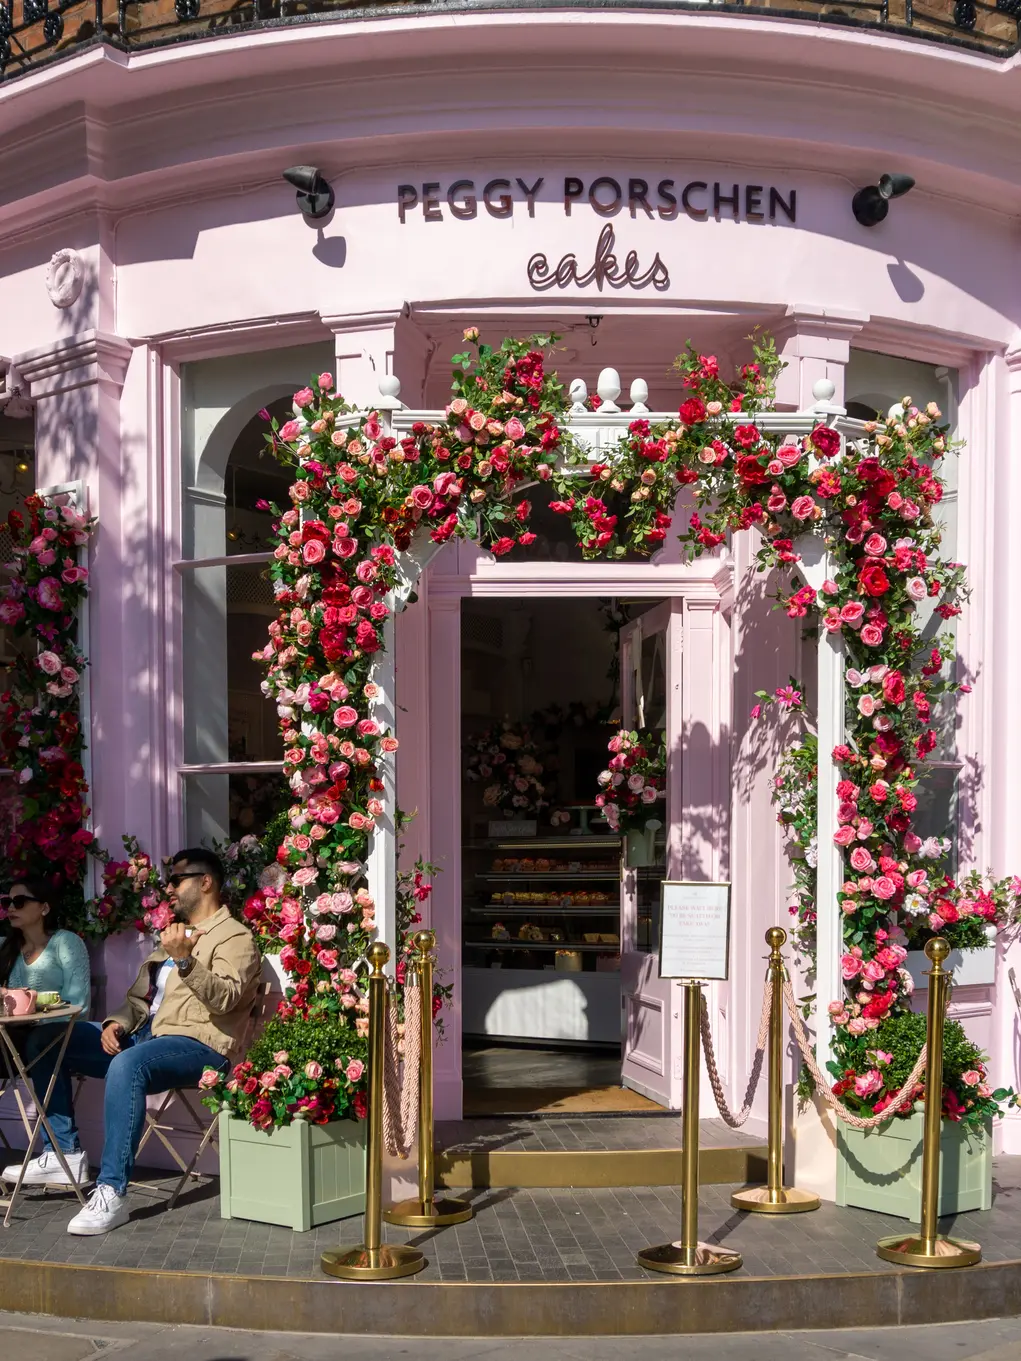 Peggy Porschen cafe exterior with flowers in an arch around the door